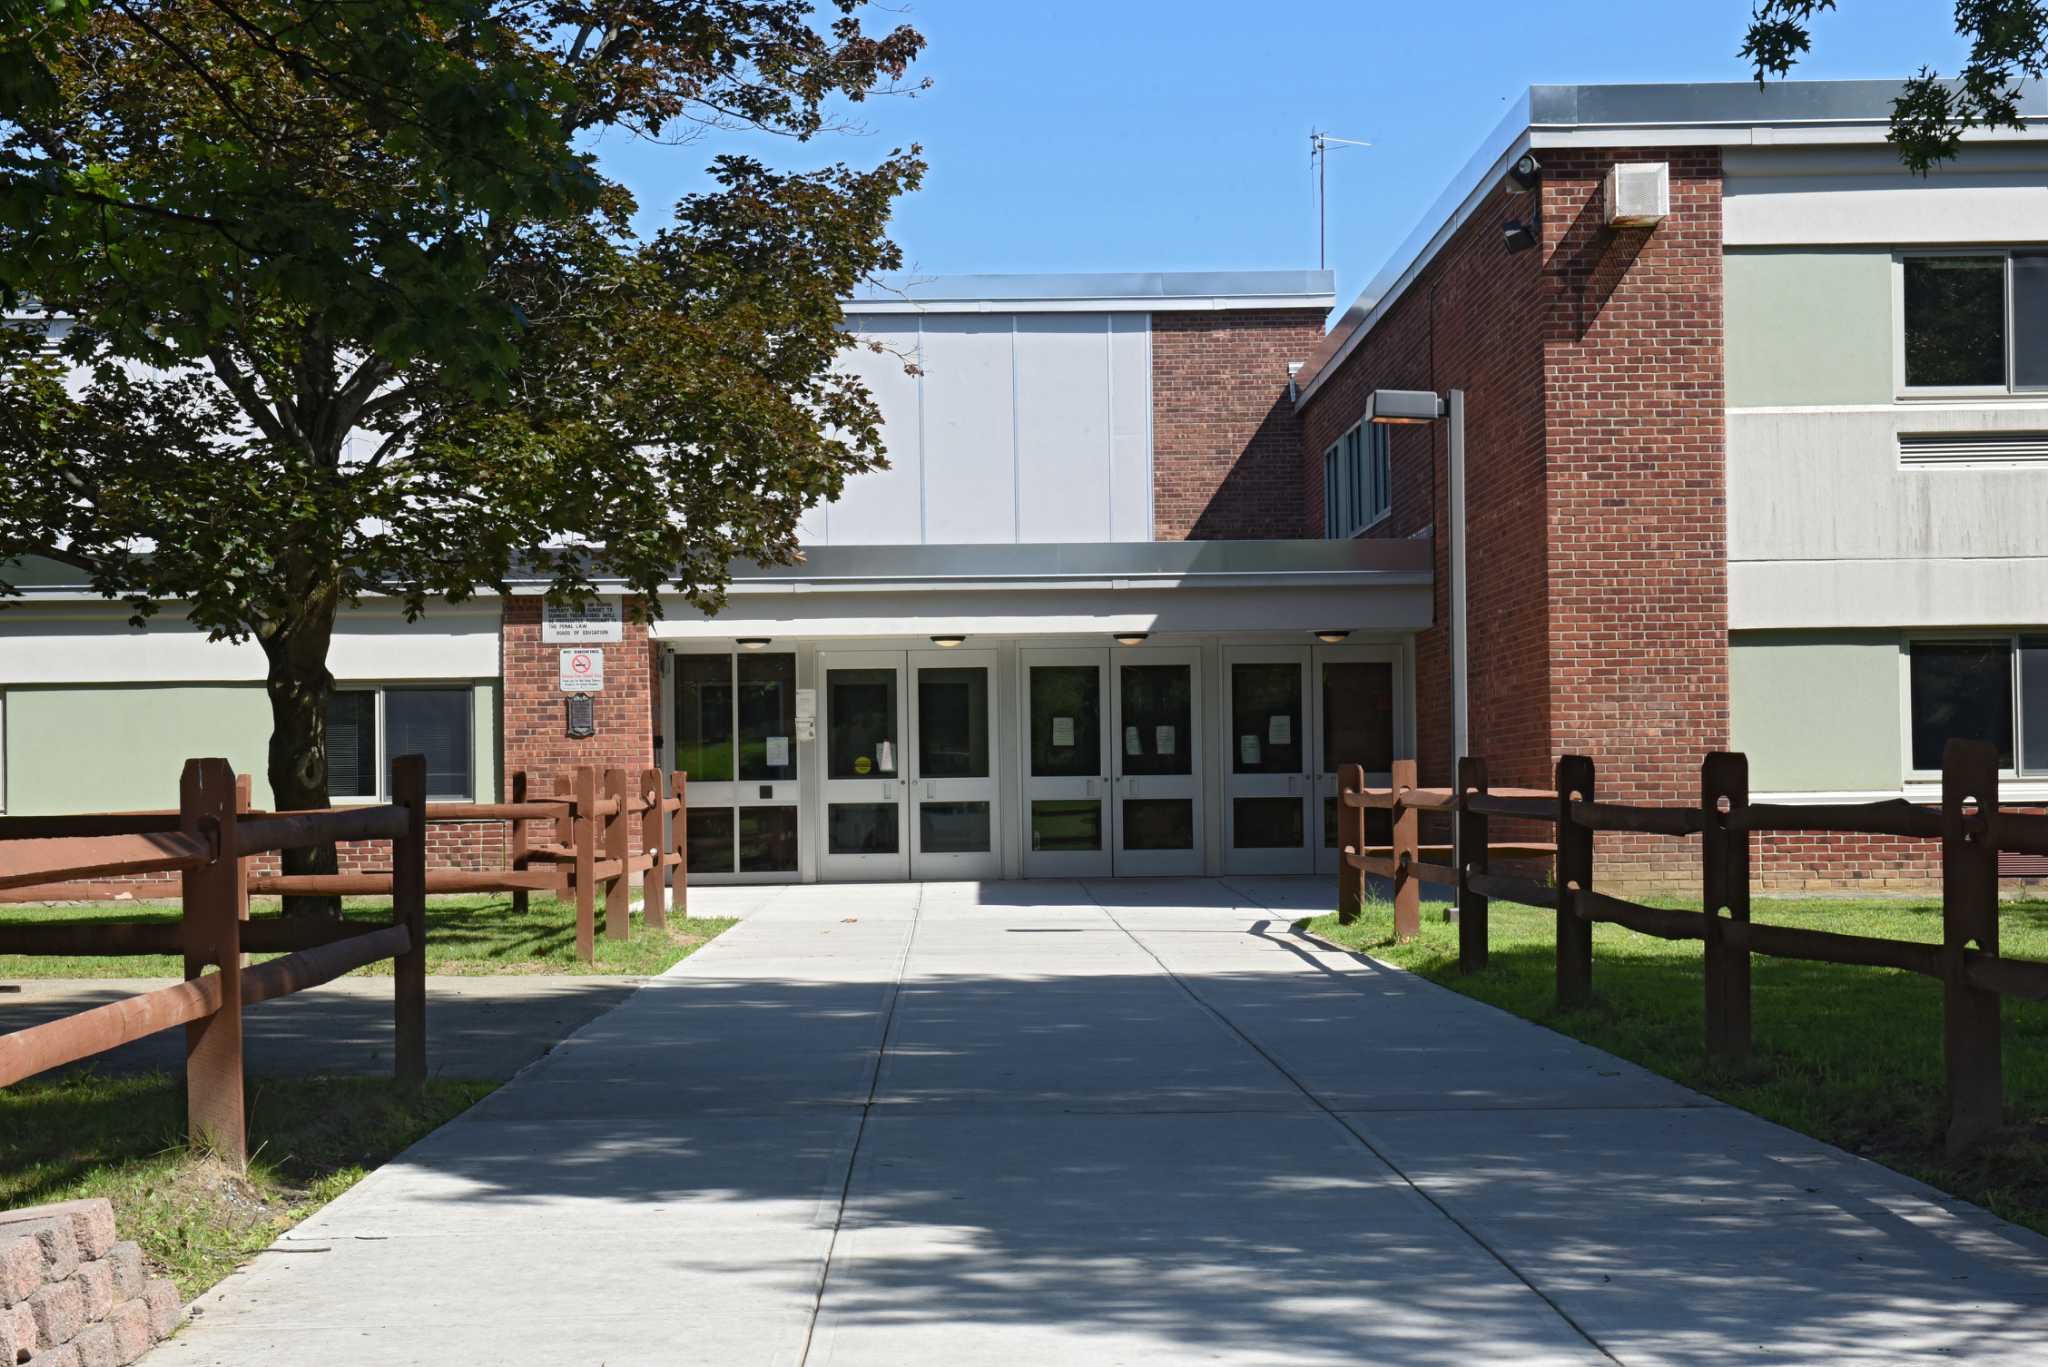 East Greenbush schools went into lockout mode